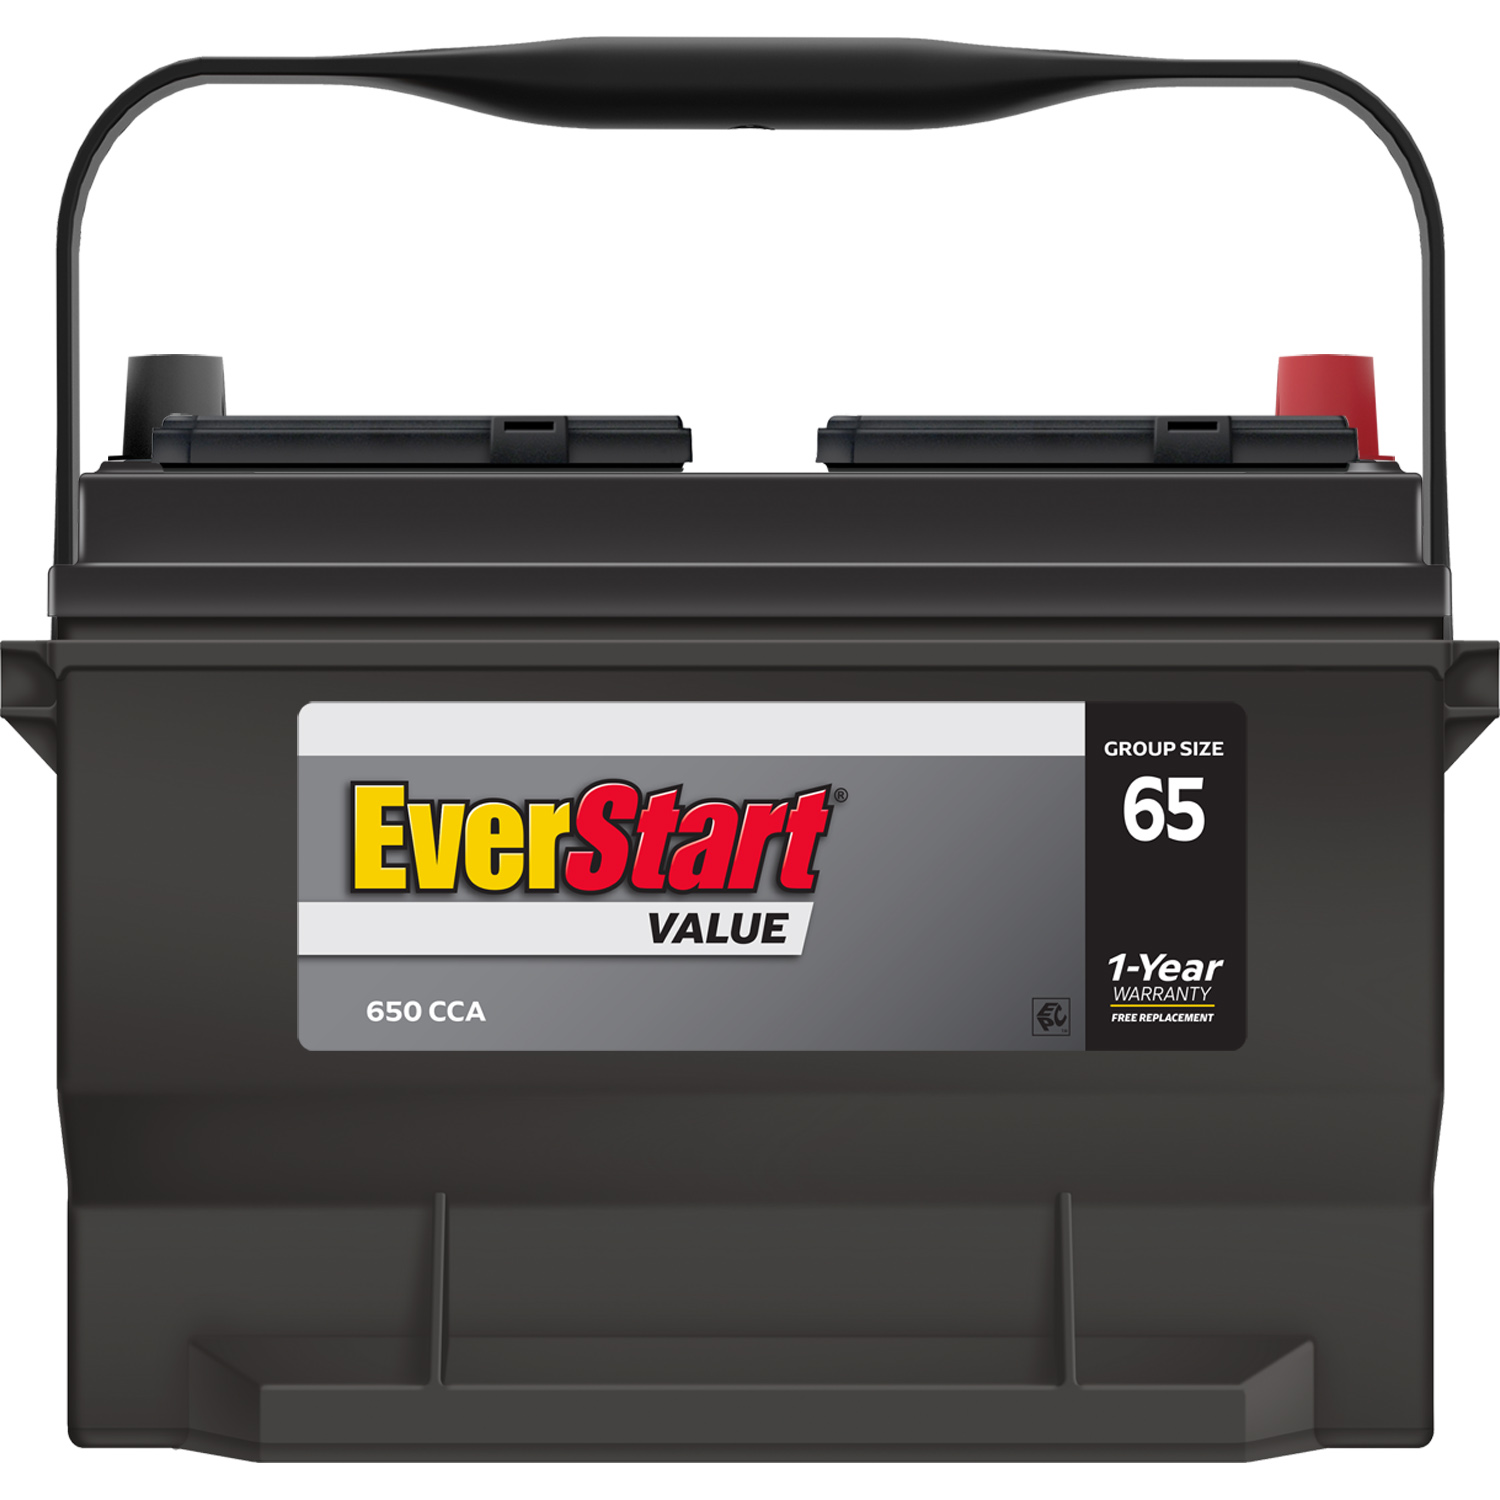 EverStart Value Lead Acid Automotive Battery, Group Size 65 12 Volts, 650 CCA - image 3 of 7